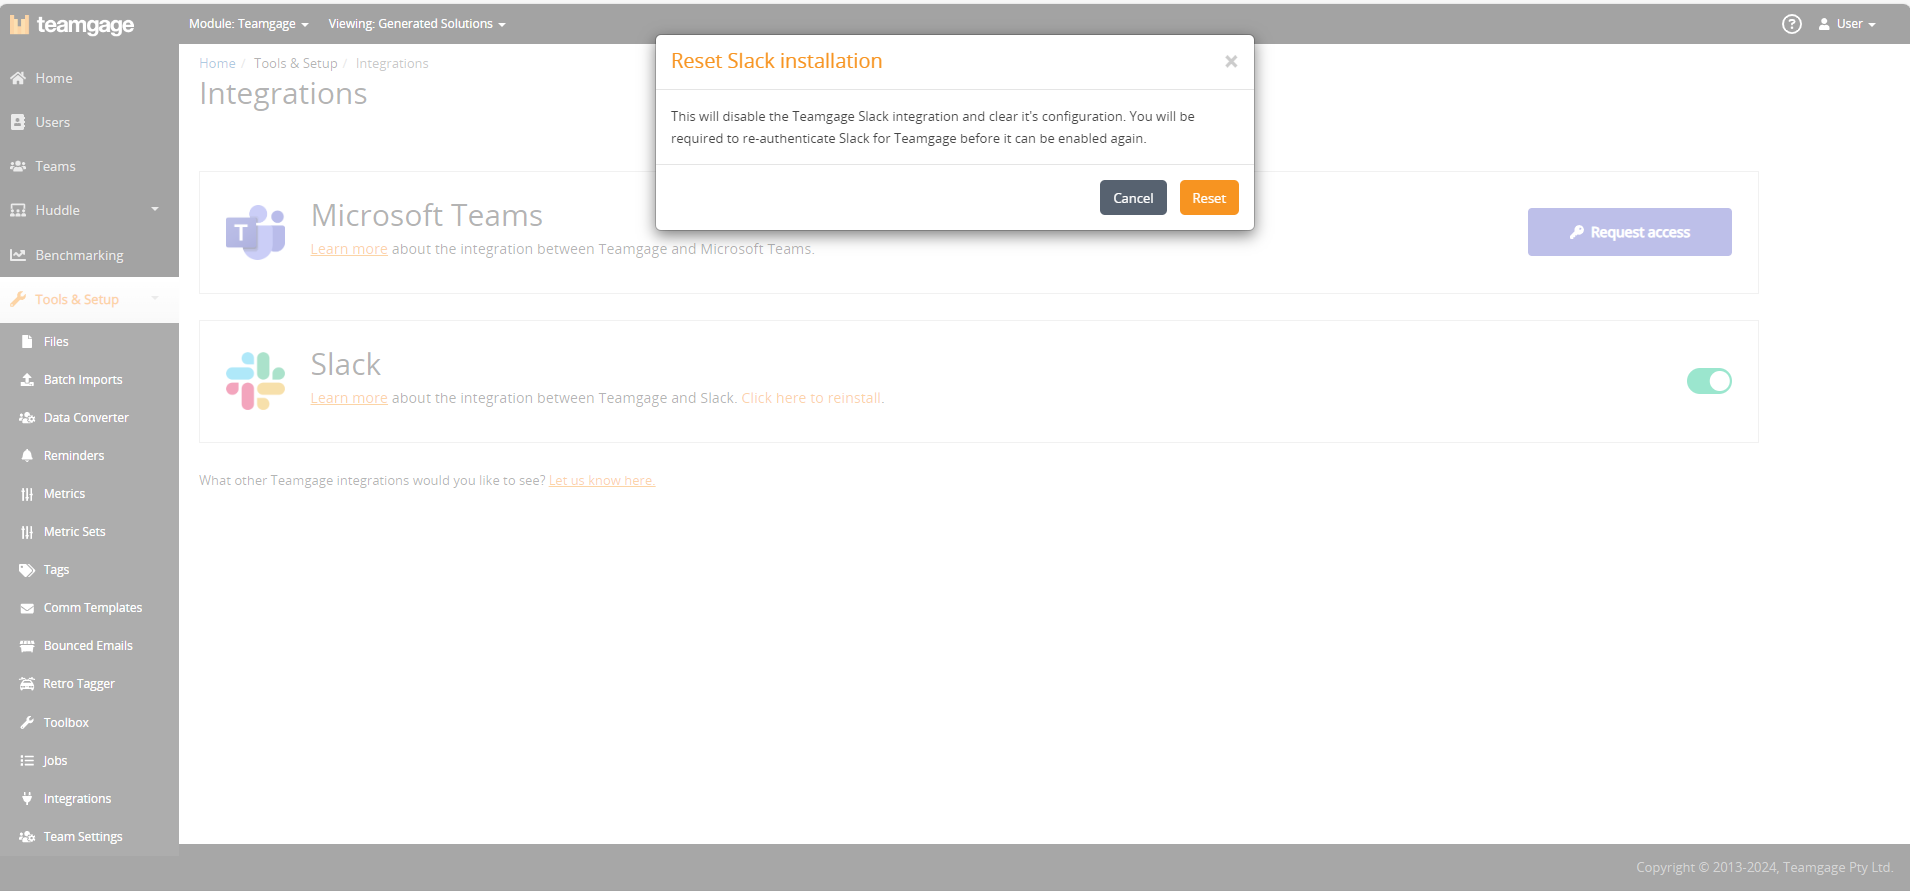 Reset Slack installation screenshot